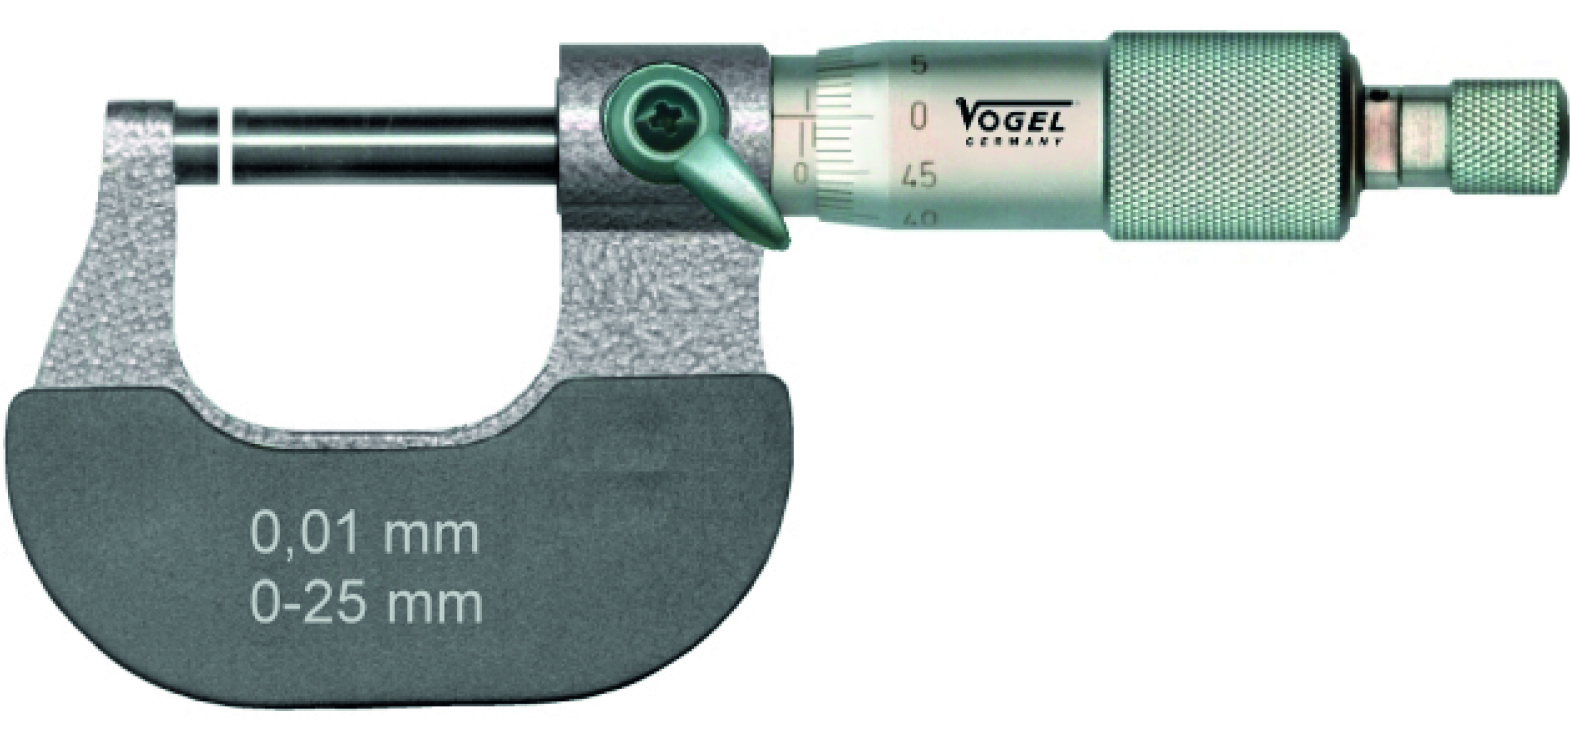 VOGEL Prec. Micrometer 25 - 50 mm carbide tipped, DIN 863, box 23 1352